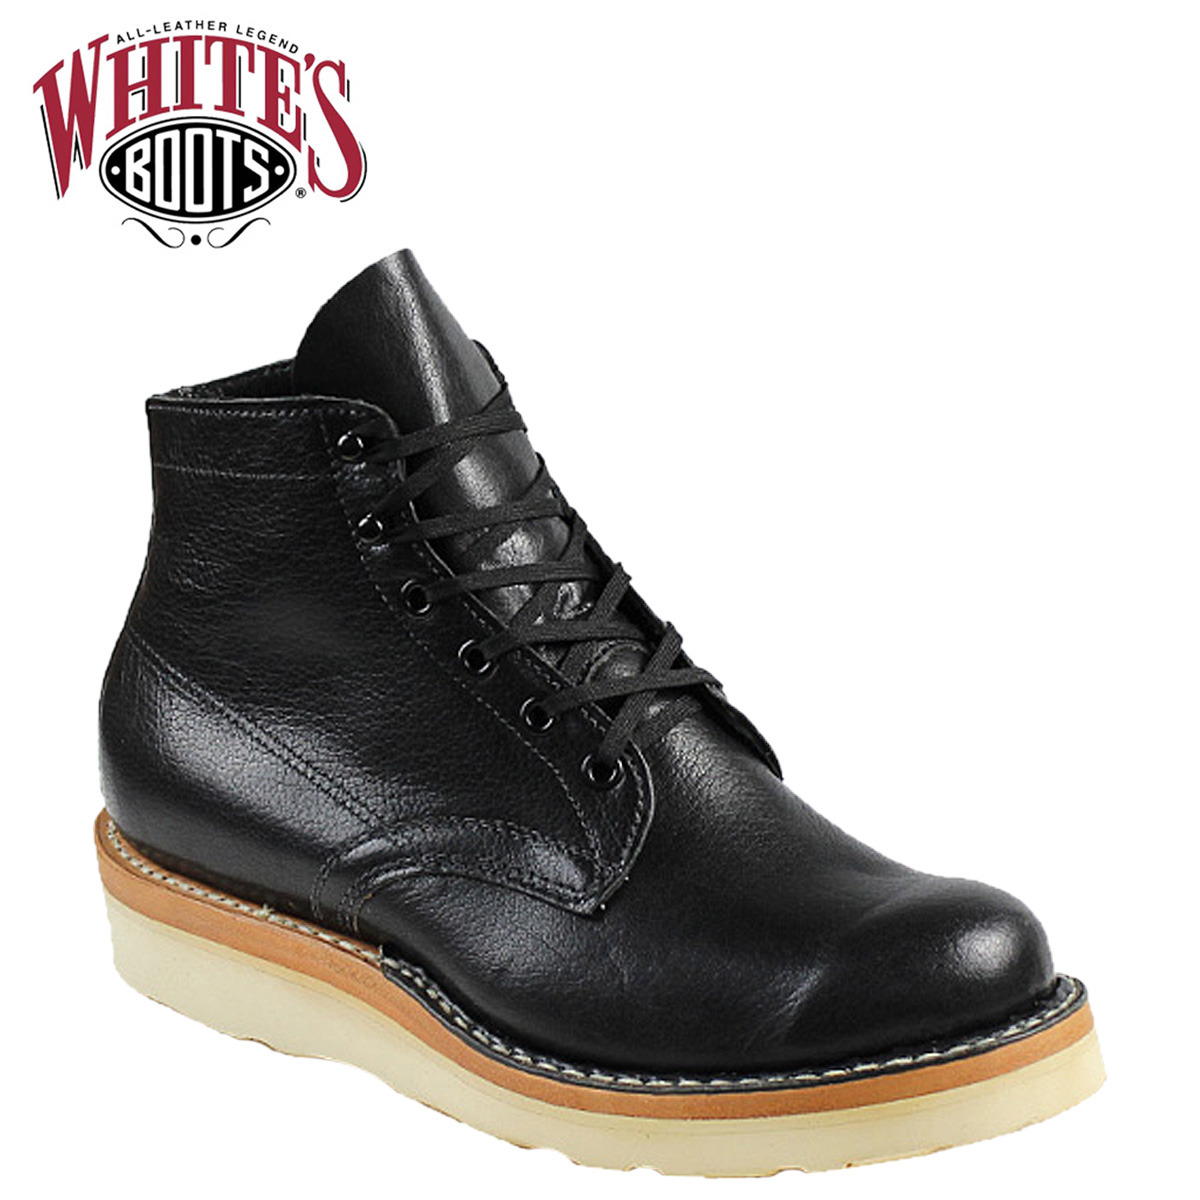 ALLSPORTS: Whites boots WHITE's BOOTS 5 inch Americana semi boots 2332 ...